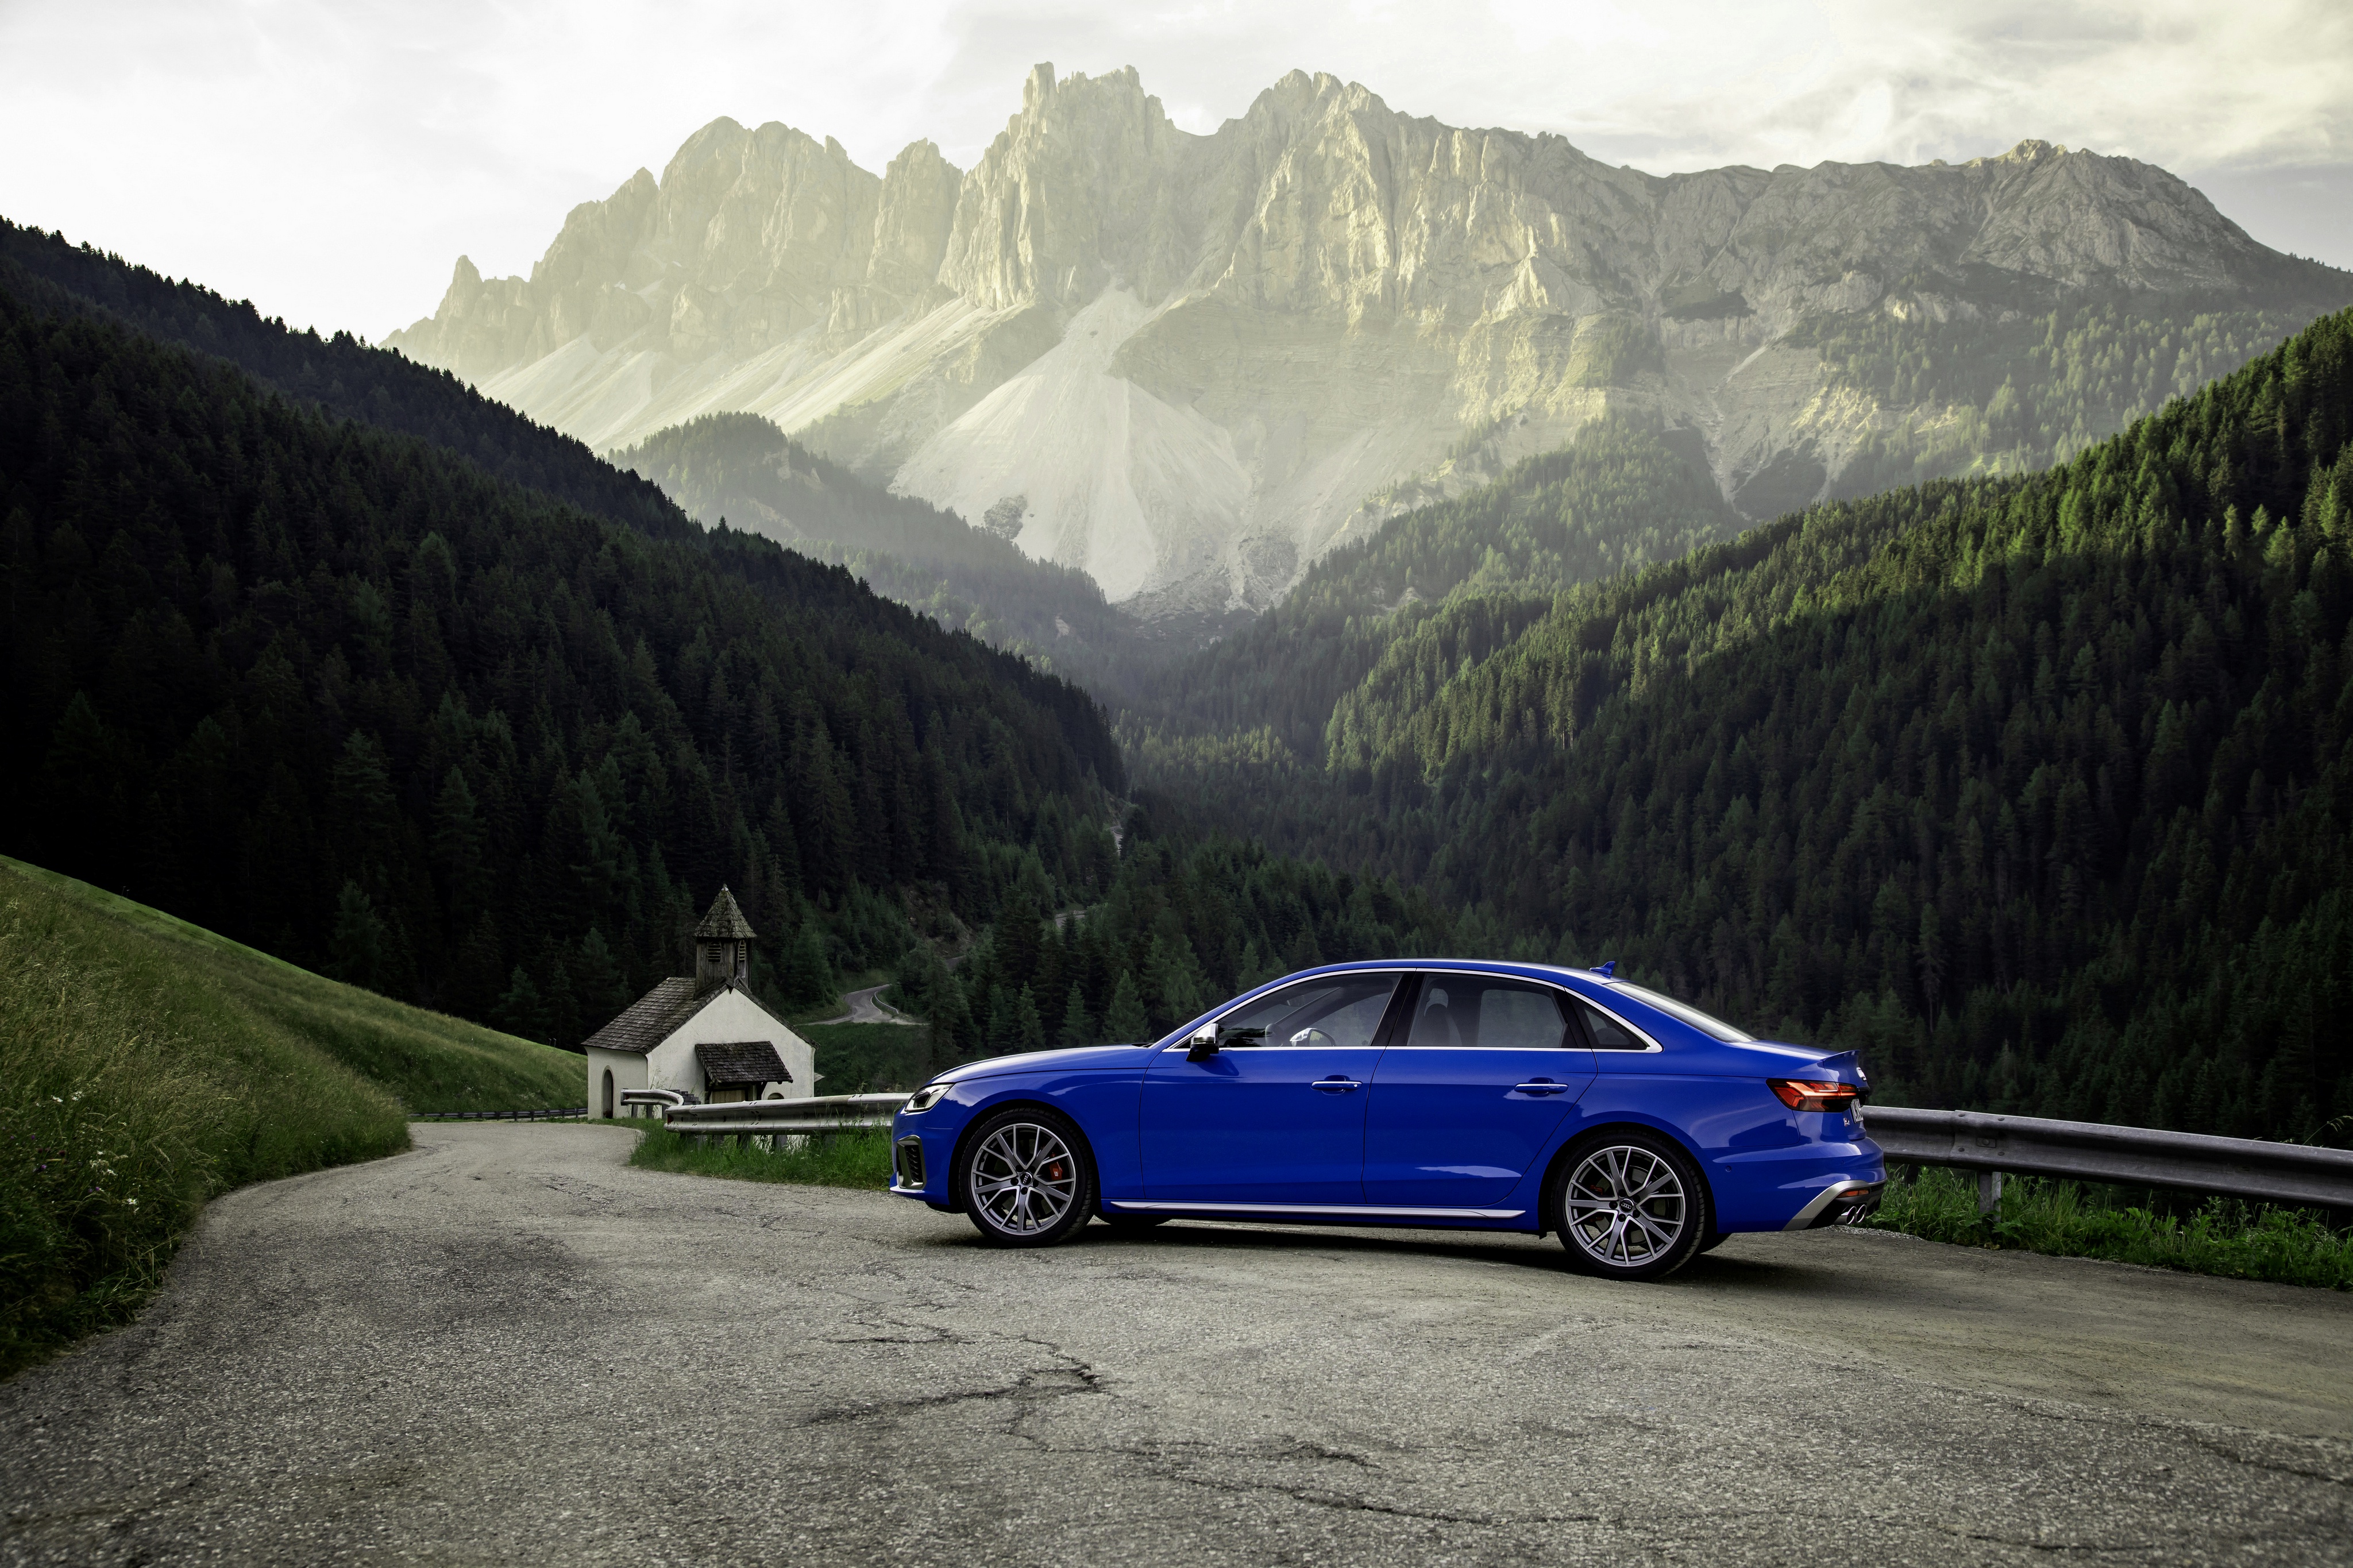 Audi Audi S4 Blue Car Car Compact Car Luxury Car Vehicle 4096x2730